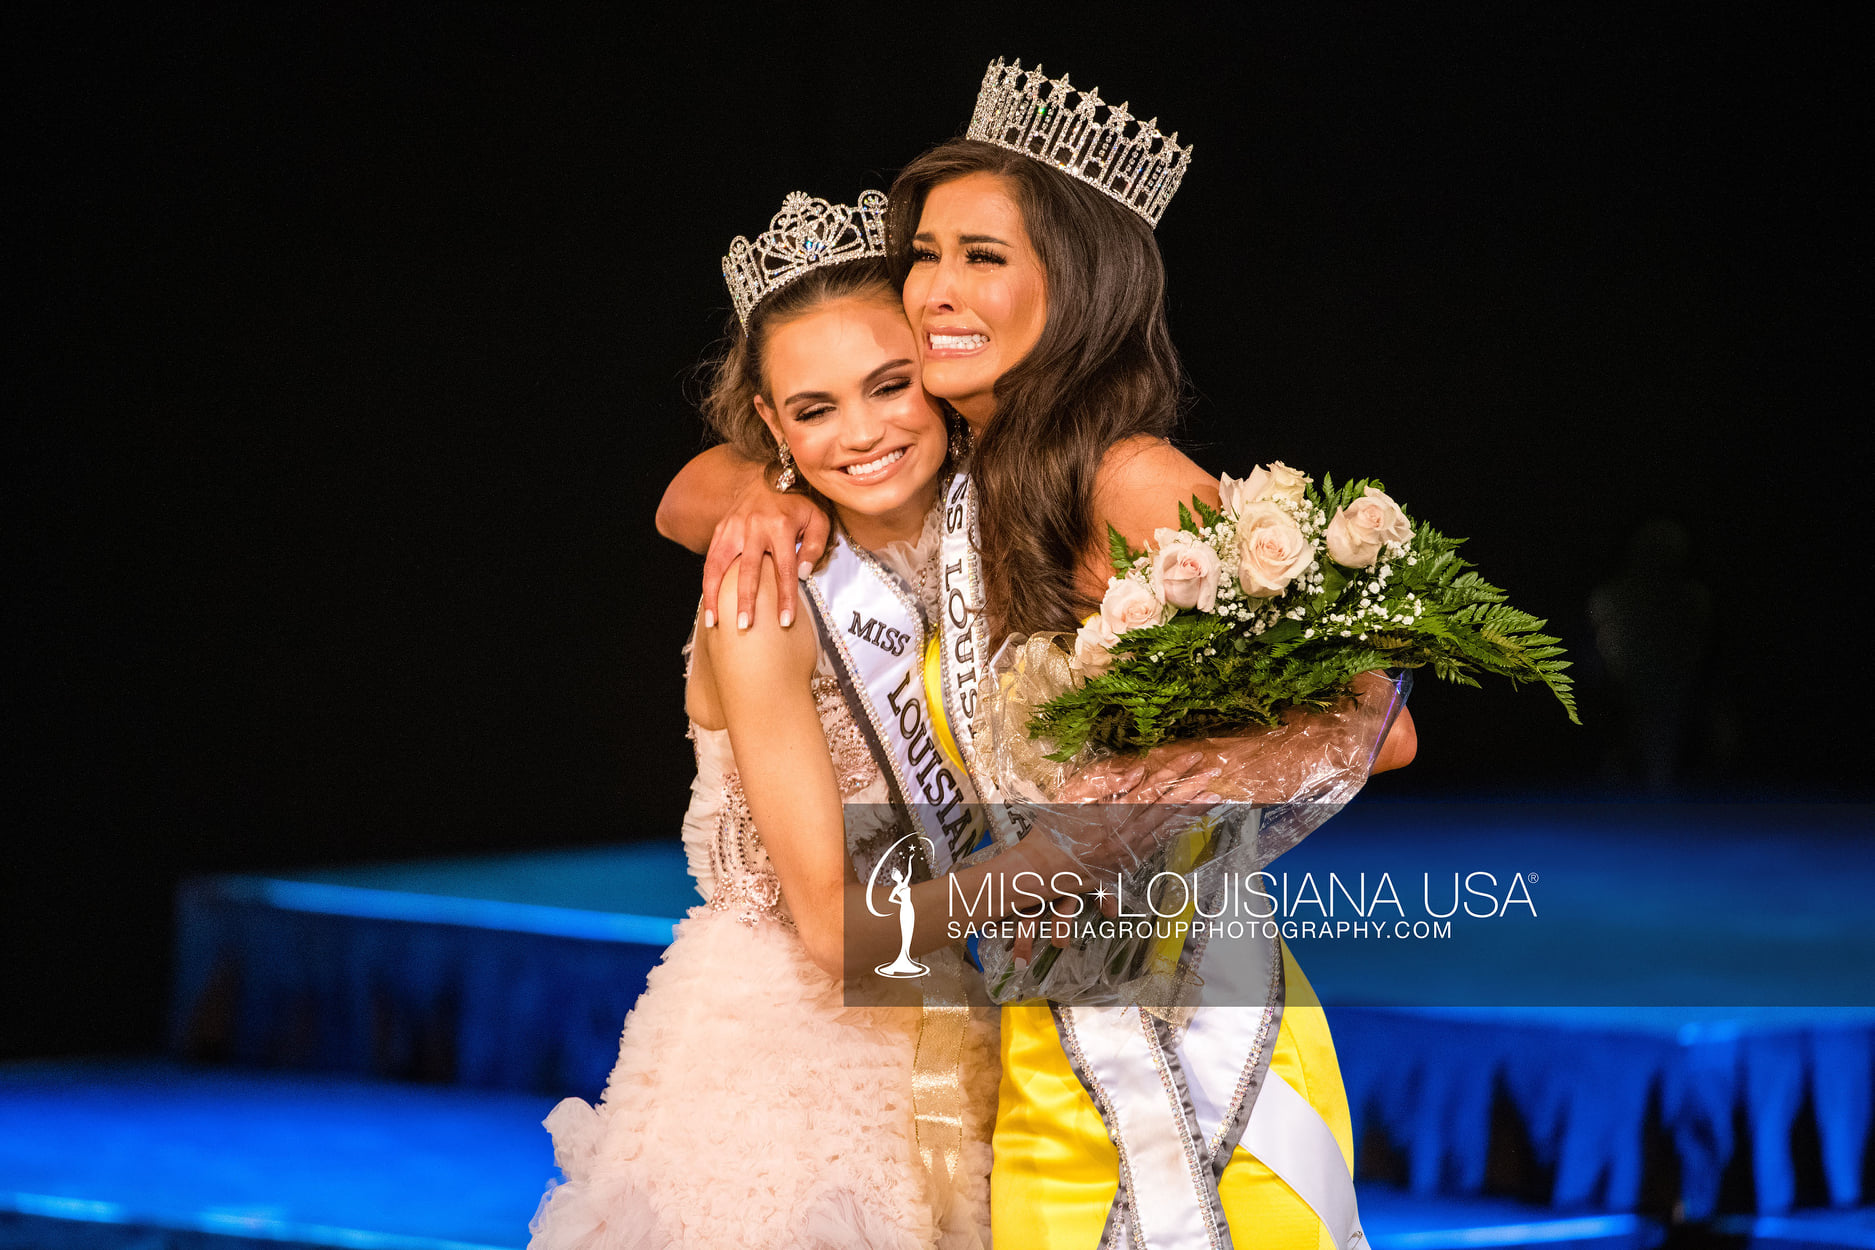 Miss Louisiana USA 2021 pageant 21